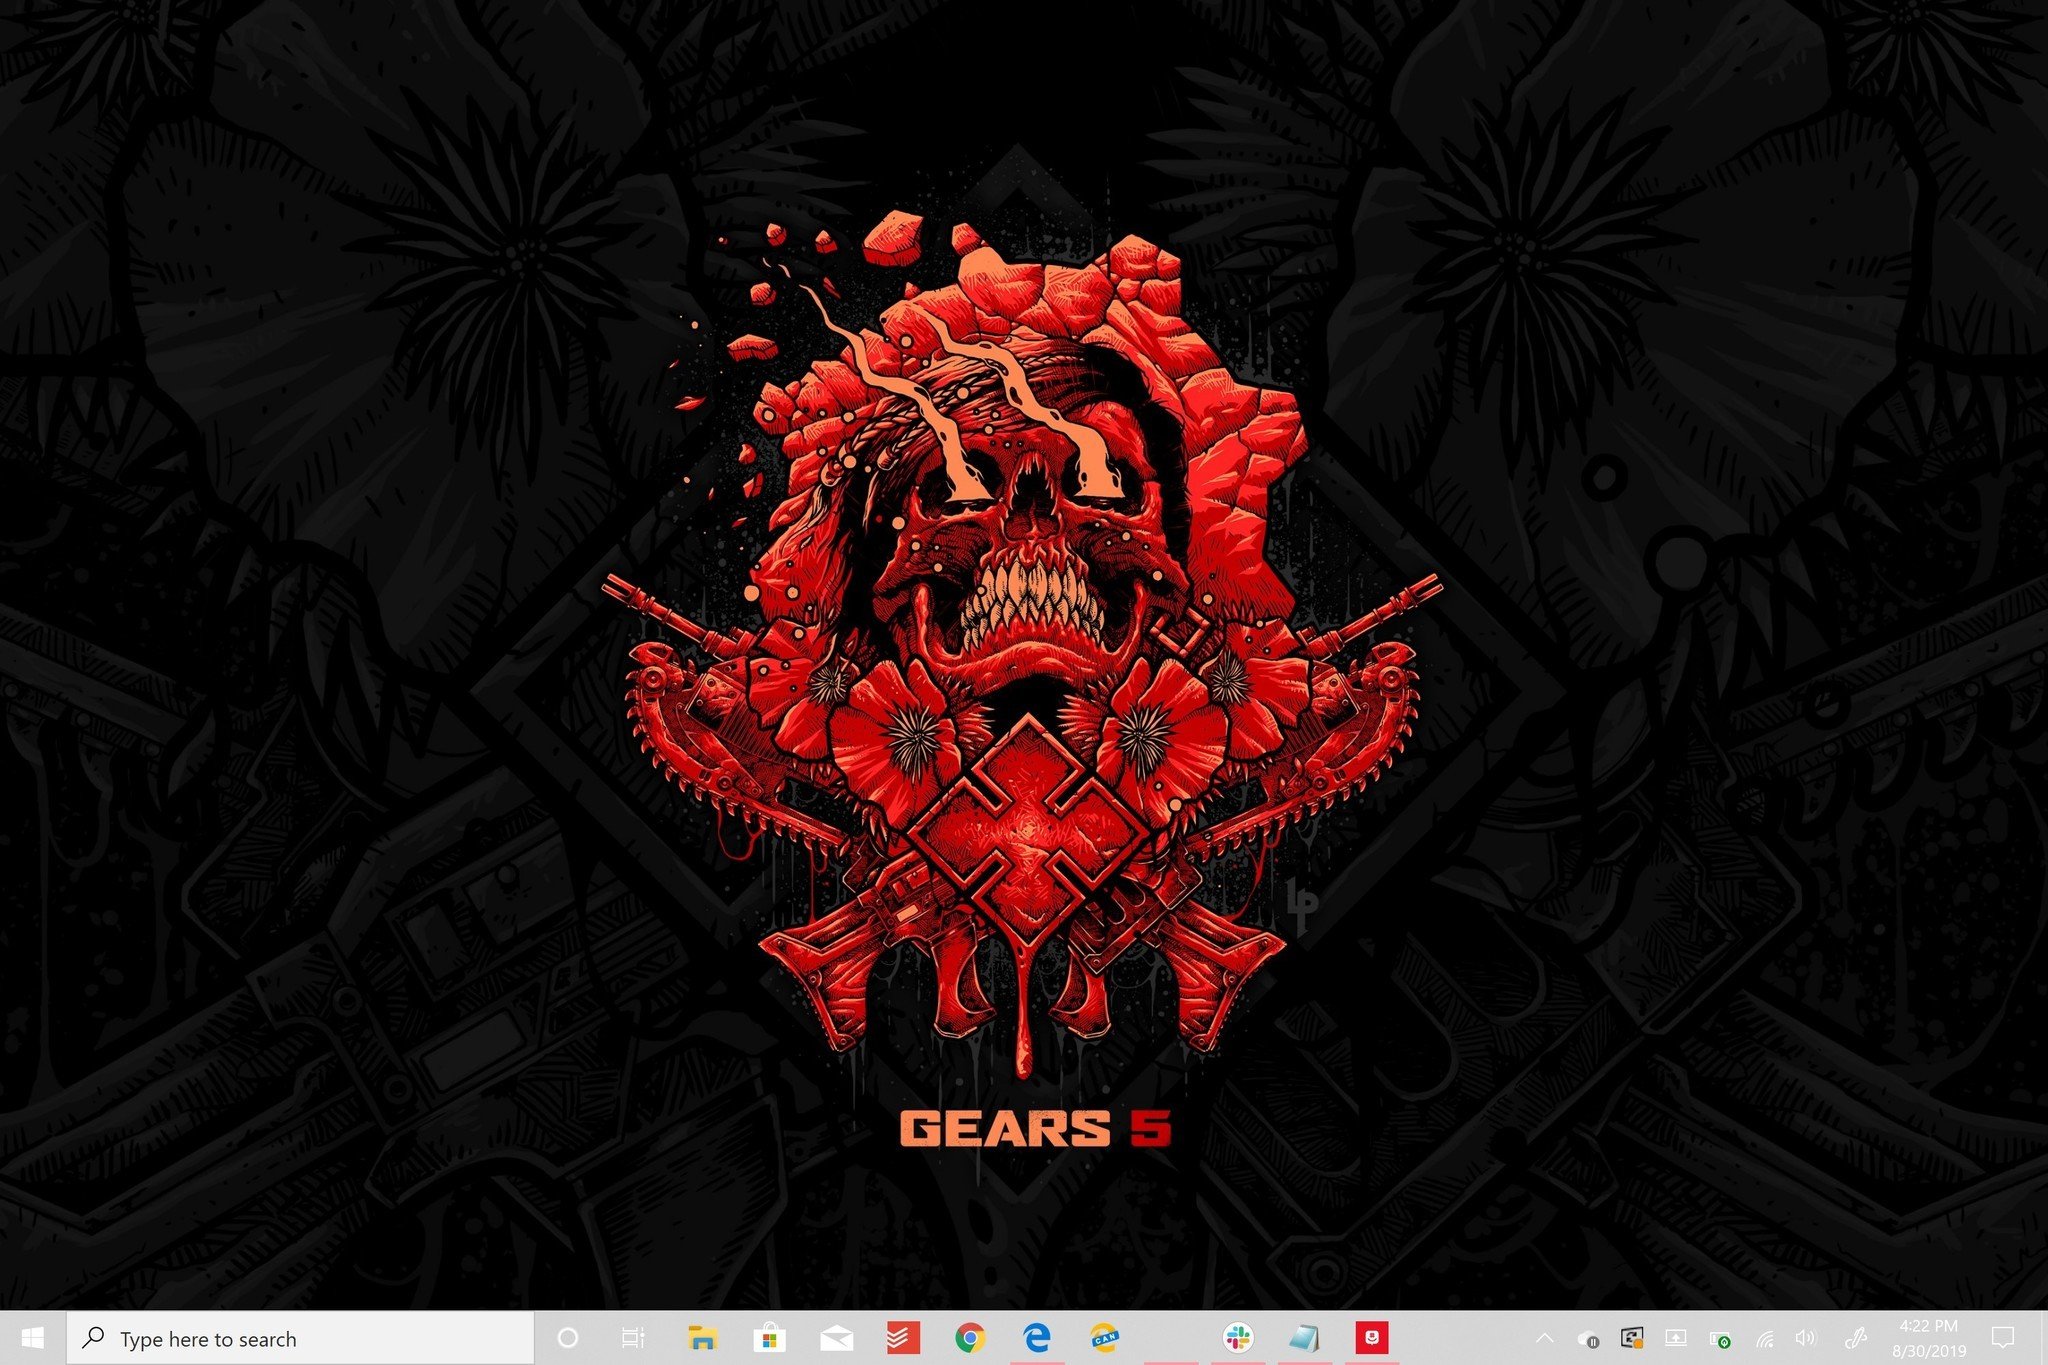 Gears 5 wallpaper pack brings stylized 4K glory to your desktop  